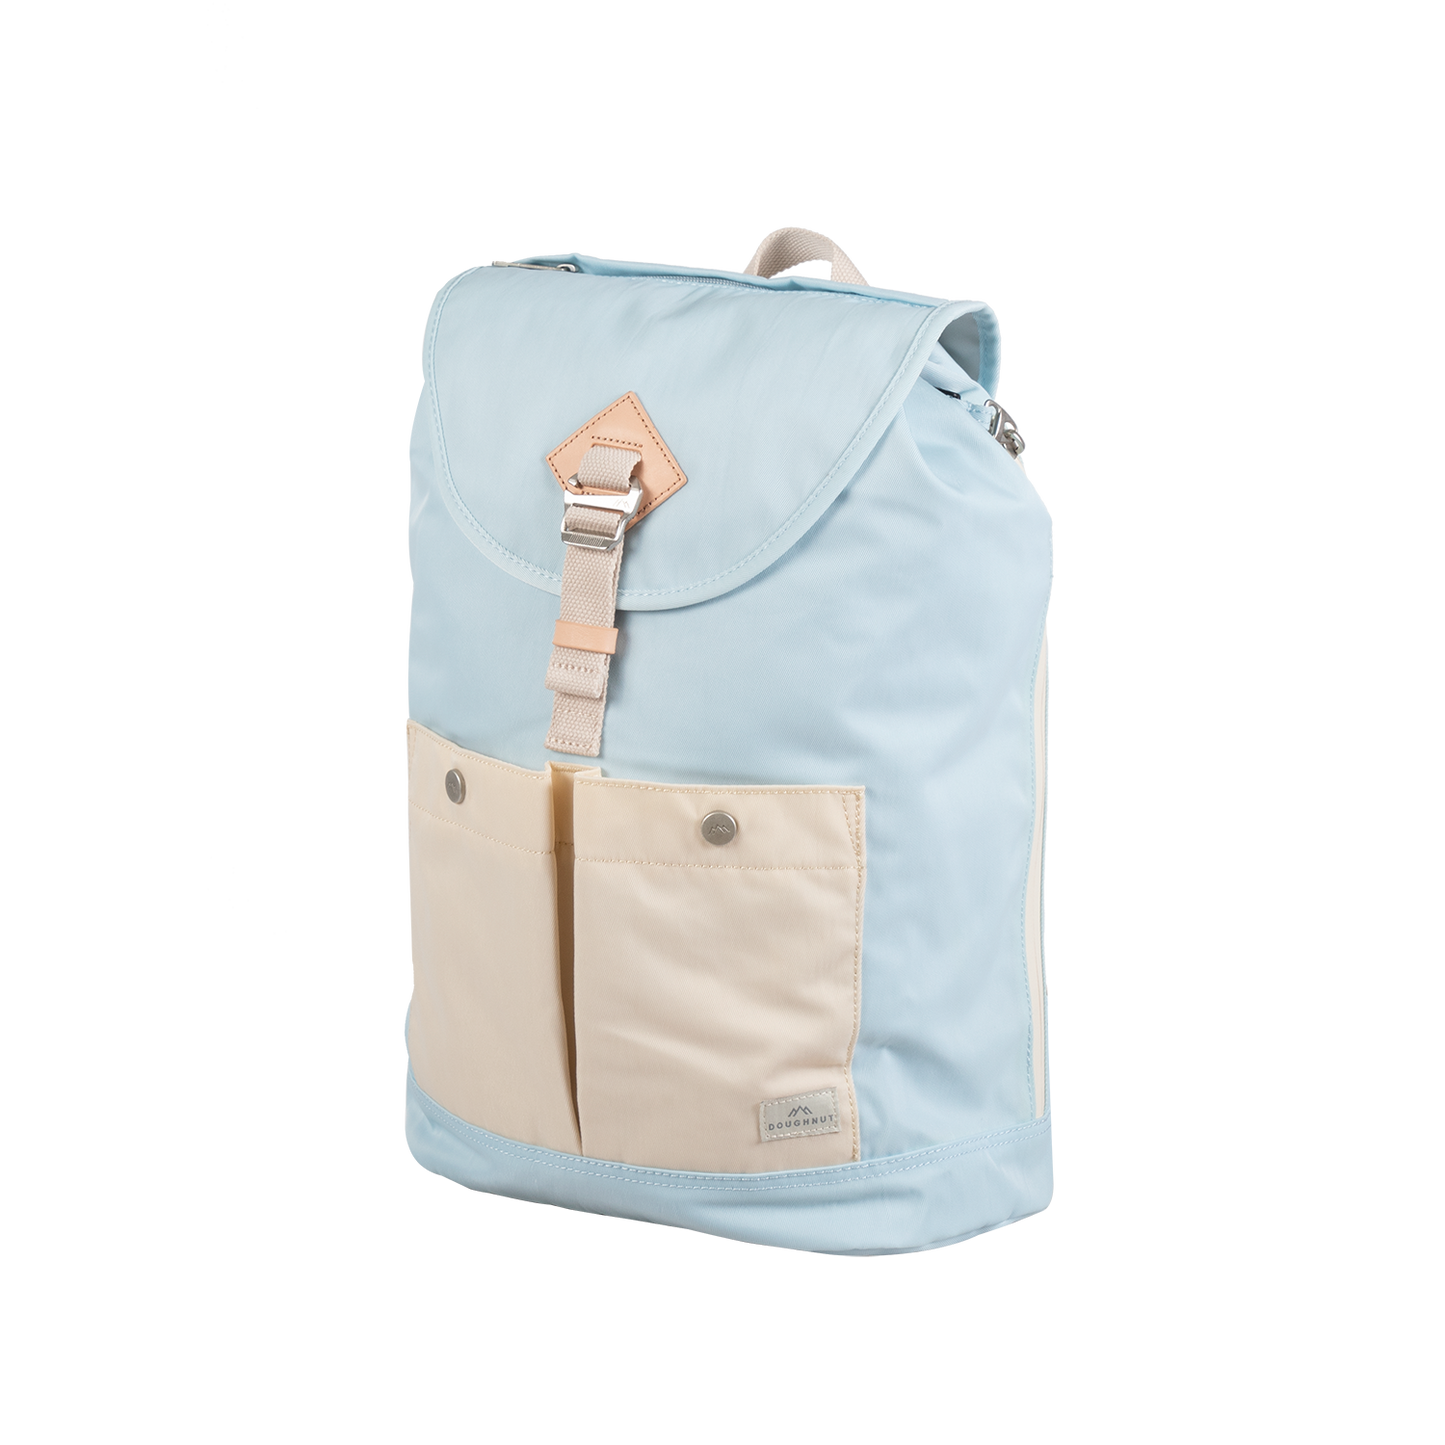 Montana Backpack